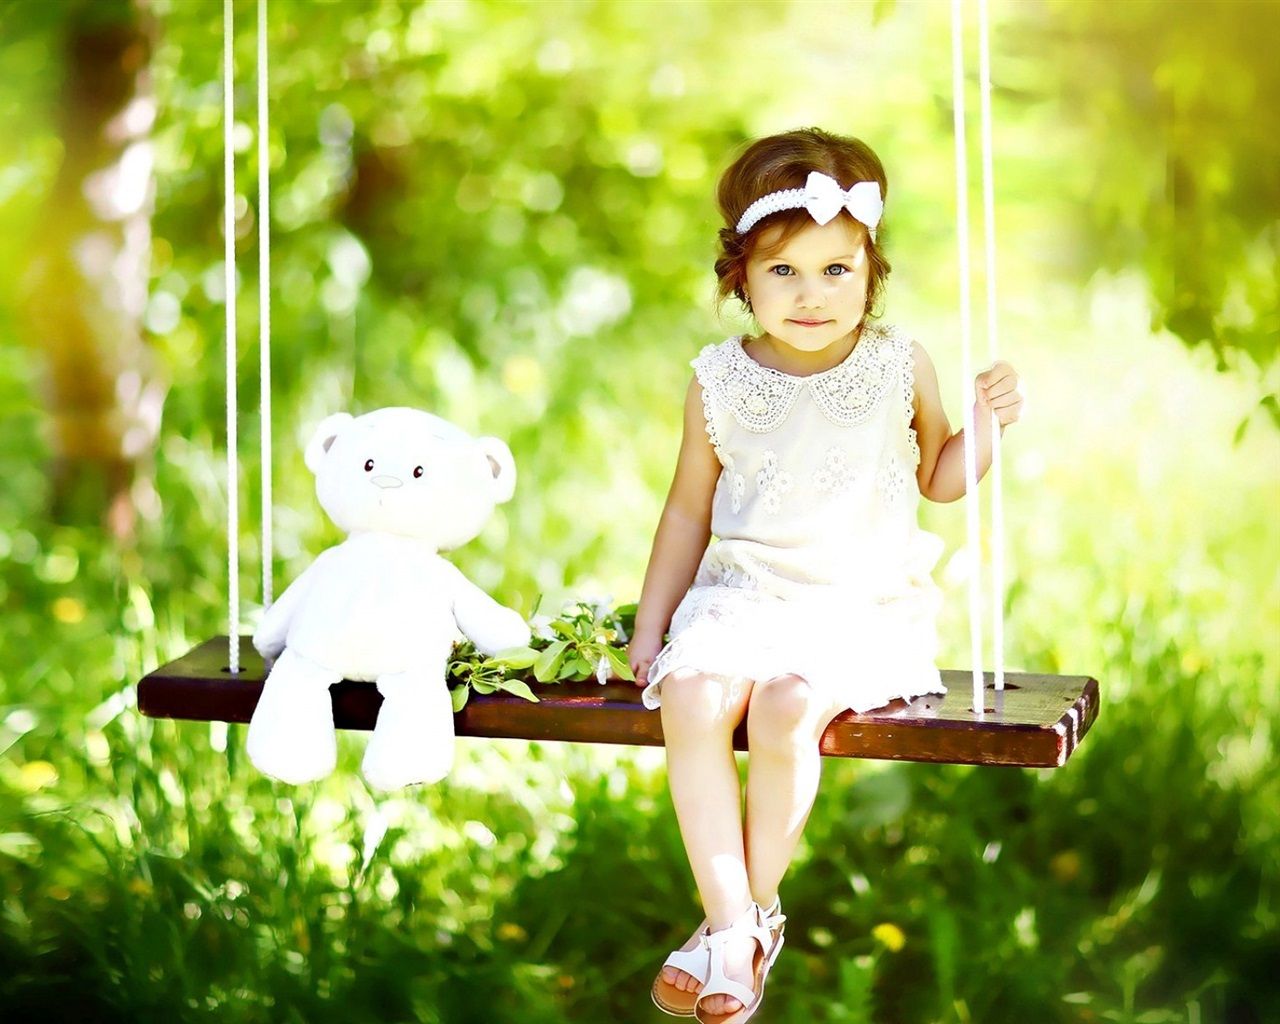 Cute Baby Girl Image In Swing